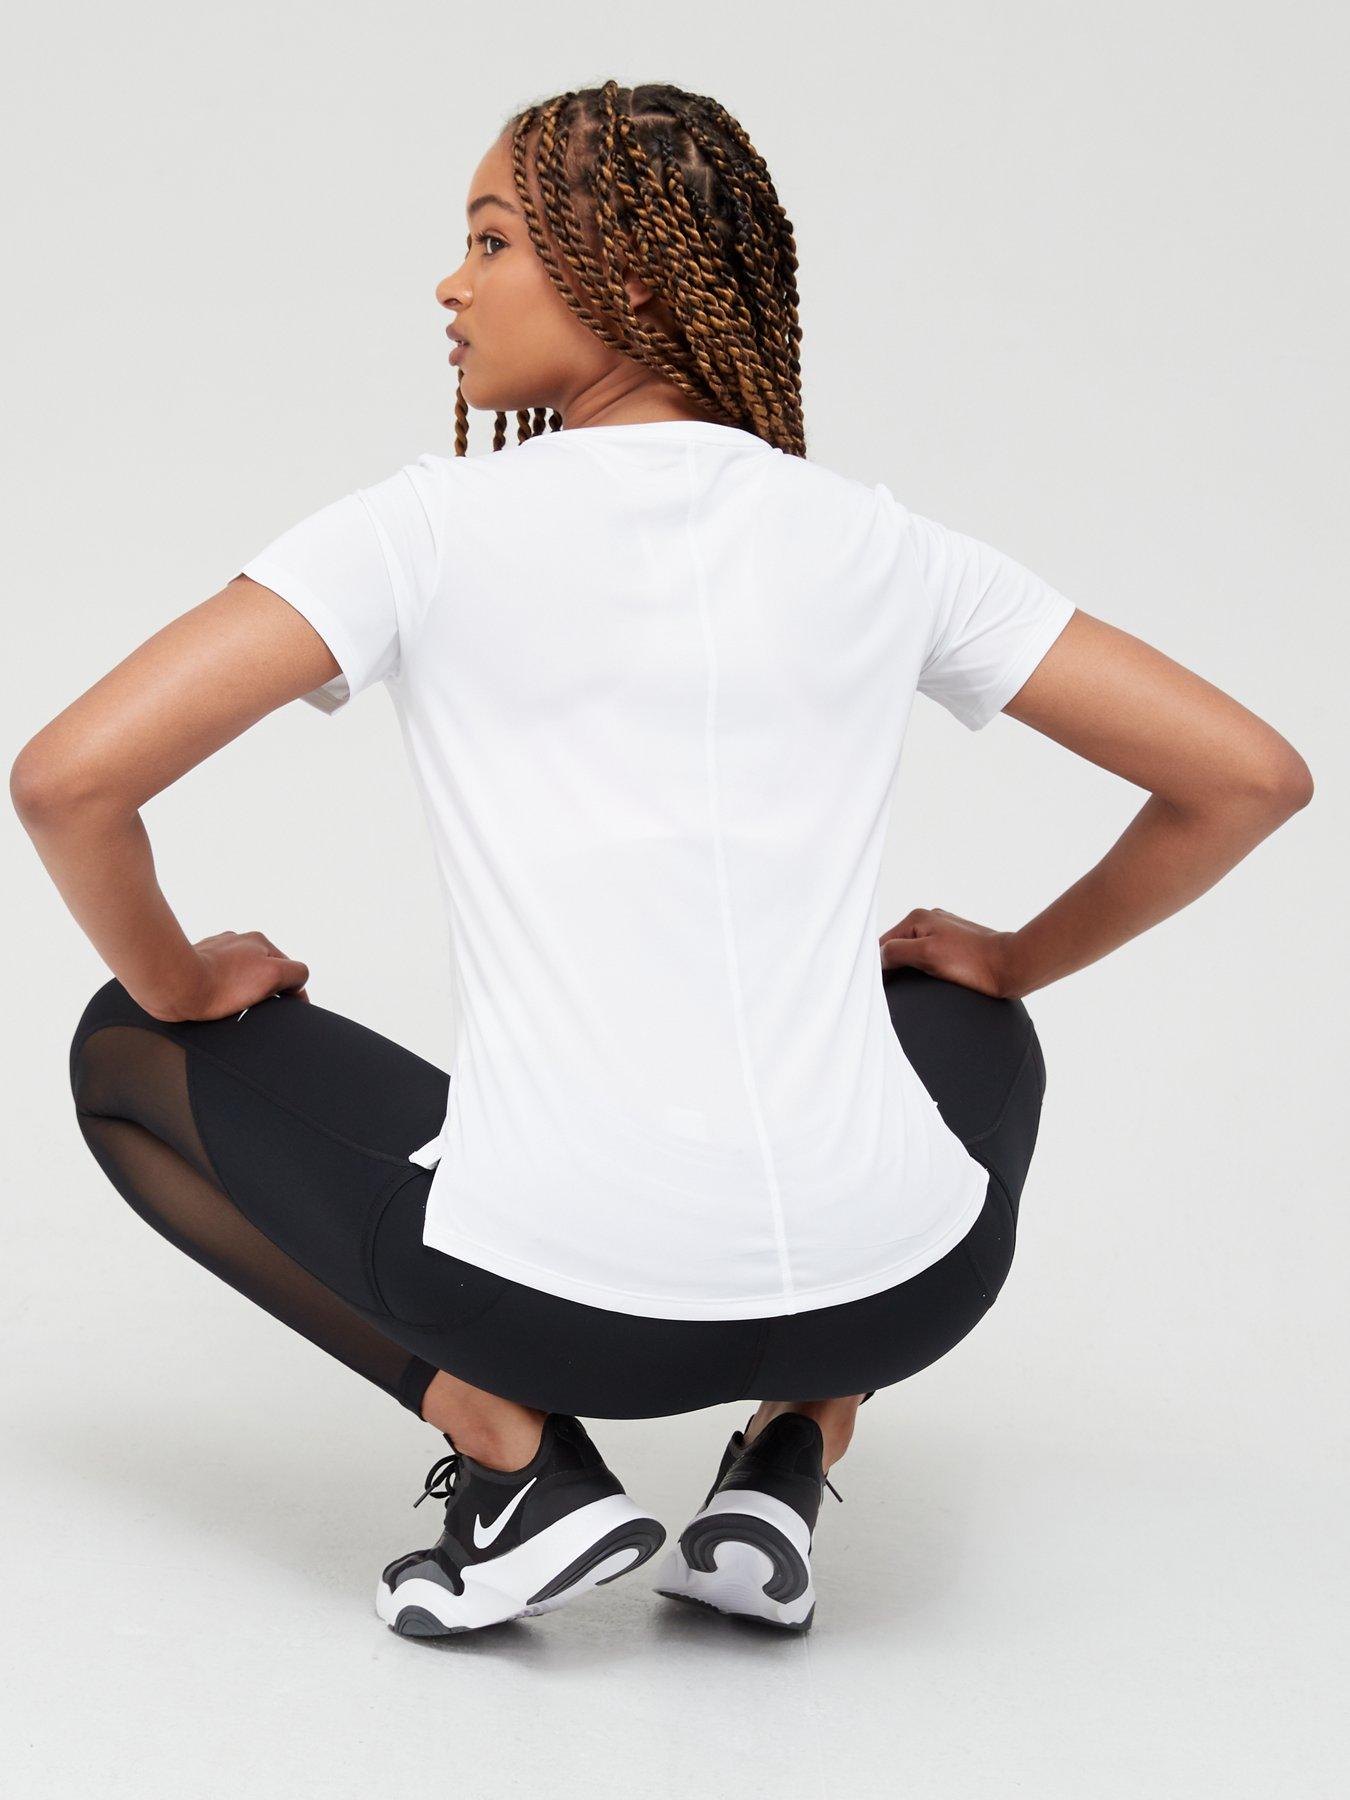 Nike Yoga Dri-FIT Luxe Women's Long-Sleeve Top - Black/Multi